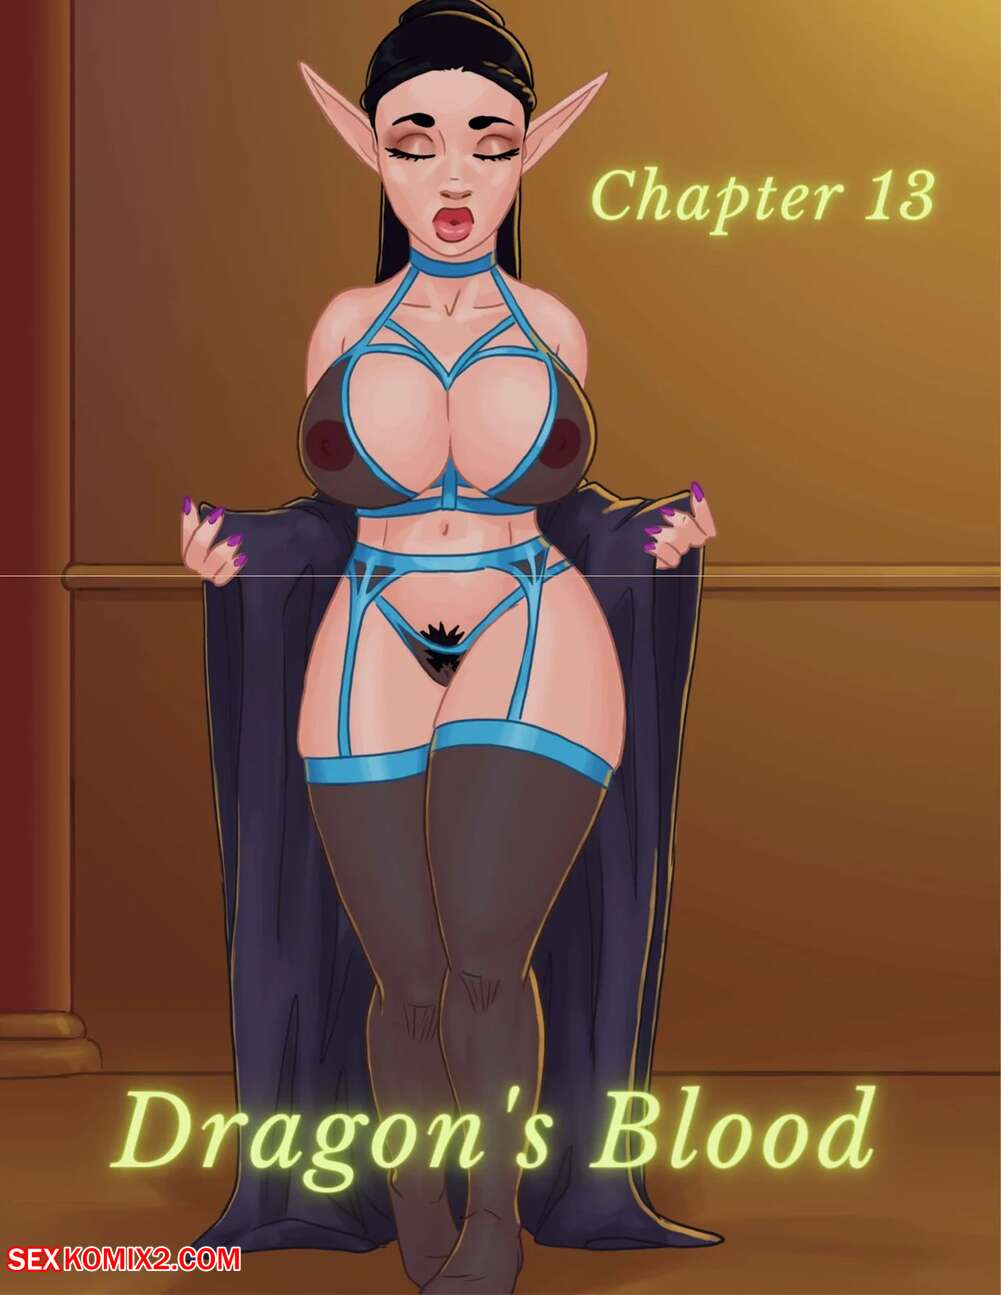 Balod Sex Com - âœ…ï¸ Porn comic Dragons Blood. Chapter 13. Mitzz , RawlyRawls. Sex comic MILF  beauties were | Porn comics in English for adults only | sexkomix2.com